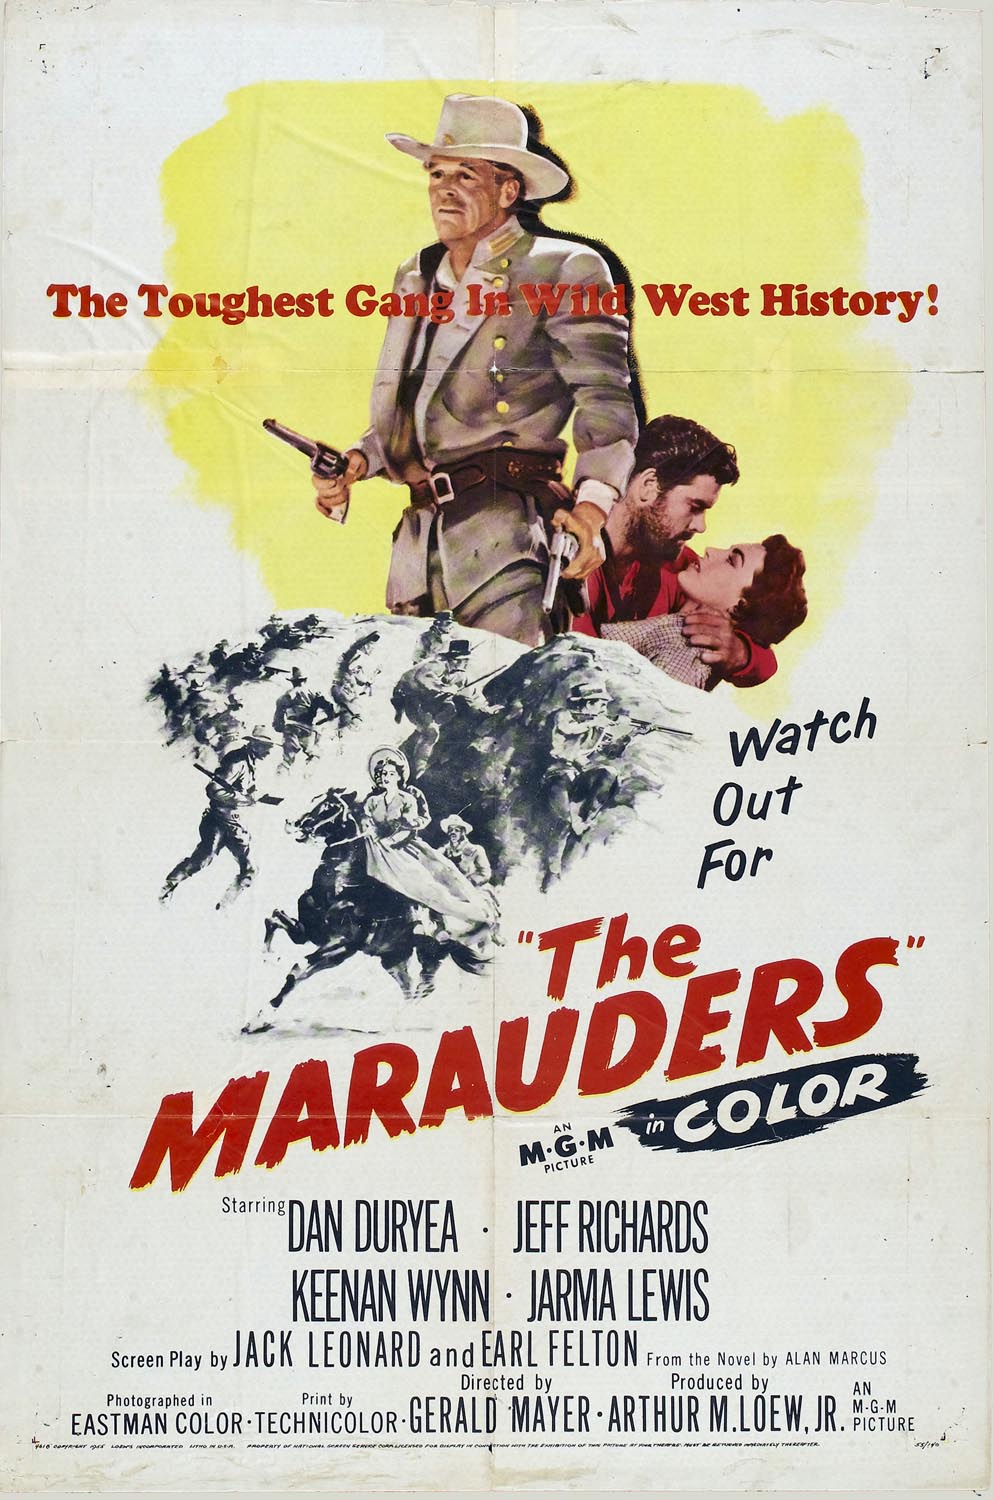 MARAUDERS, THE